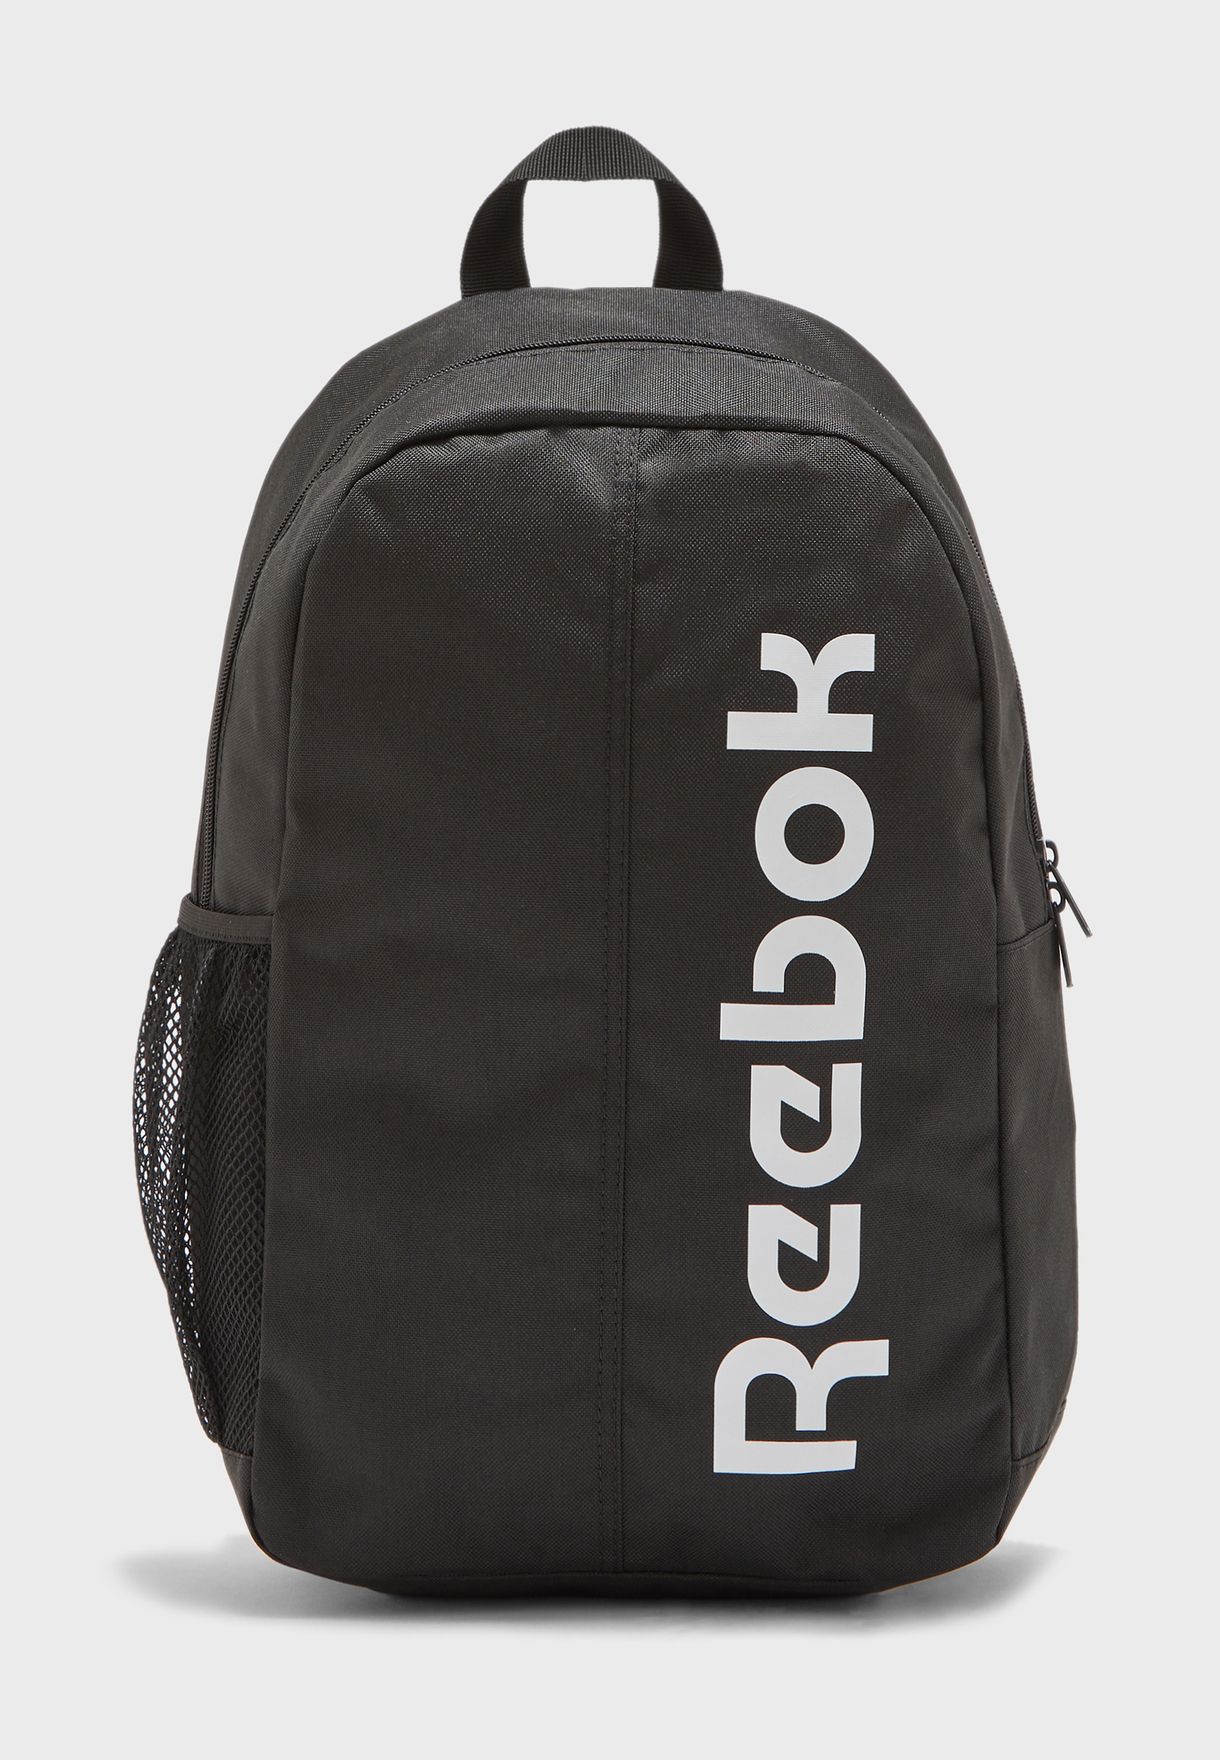 new reebok bag